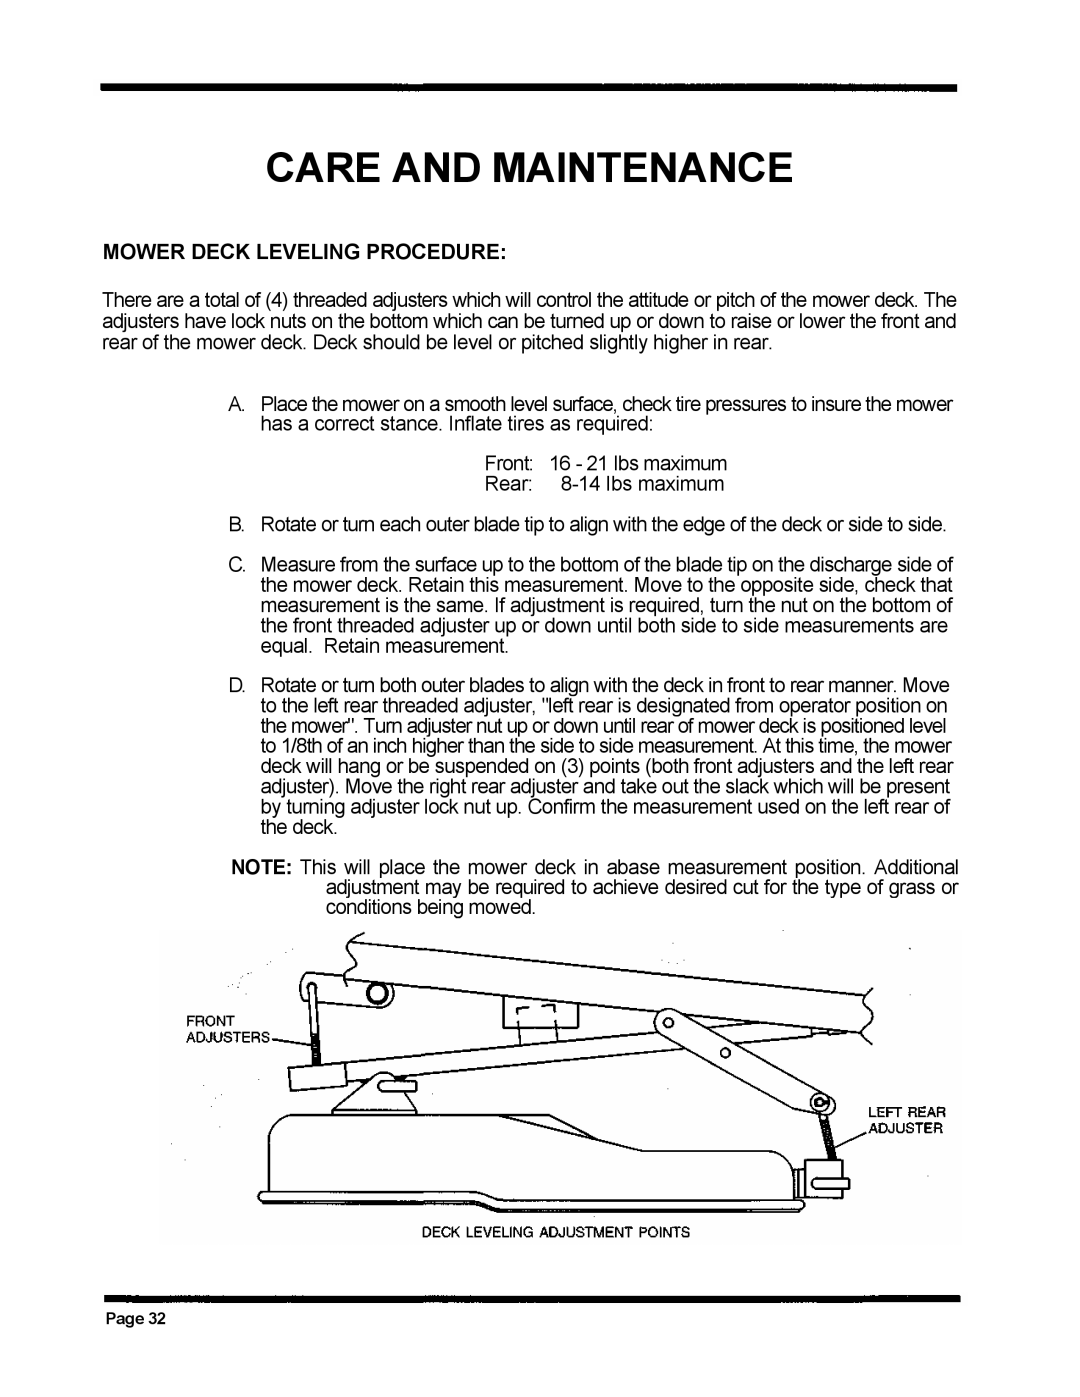 Dixon ZTR 5020, ZTR 5424 manual Care And Maintenance, Mower Deck Leveling Procedure 